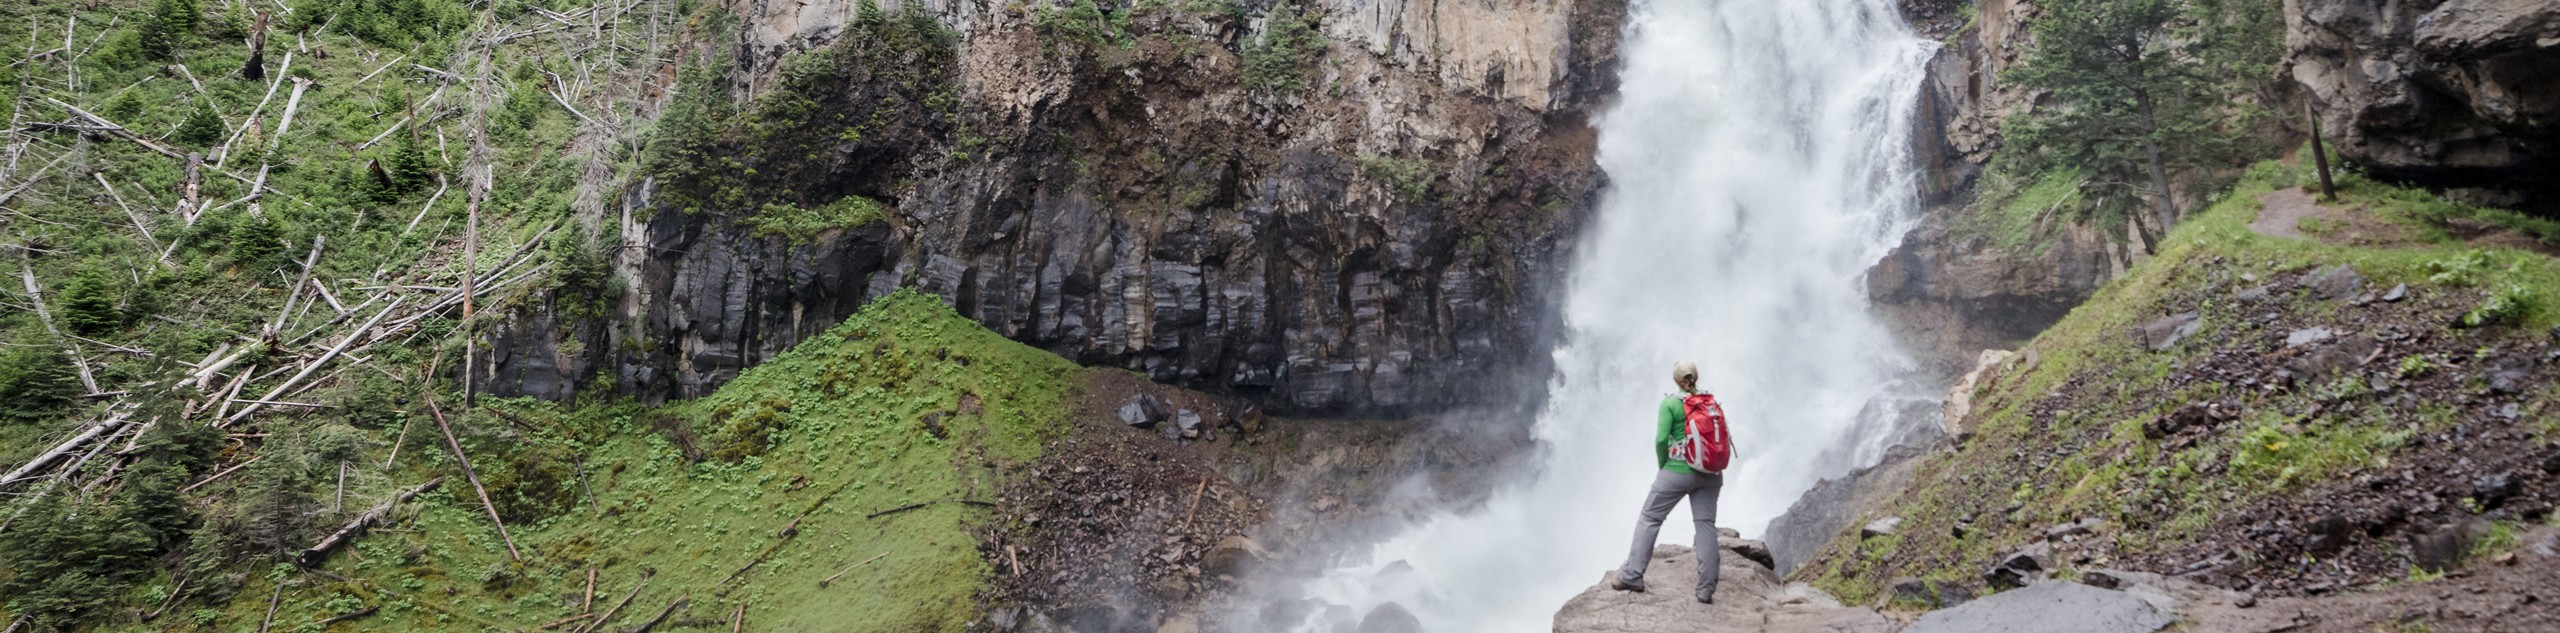 Osprey Falls Via Old Bunsen Peak Road